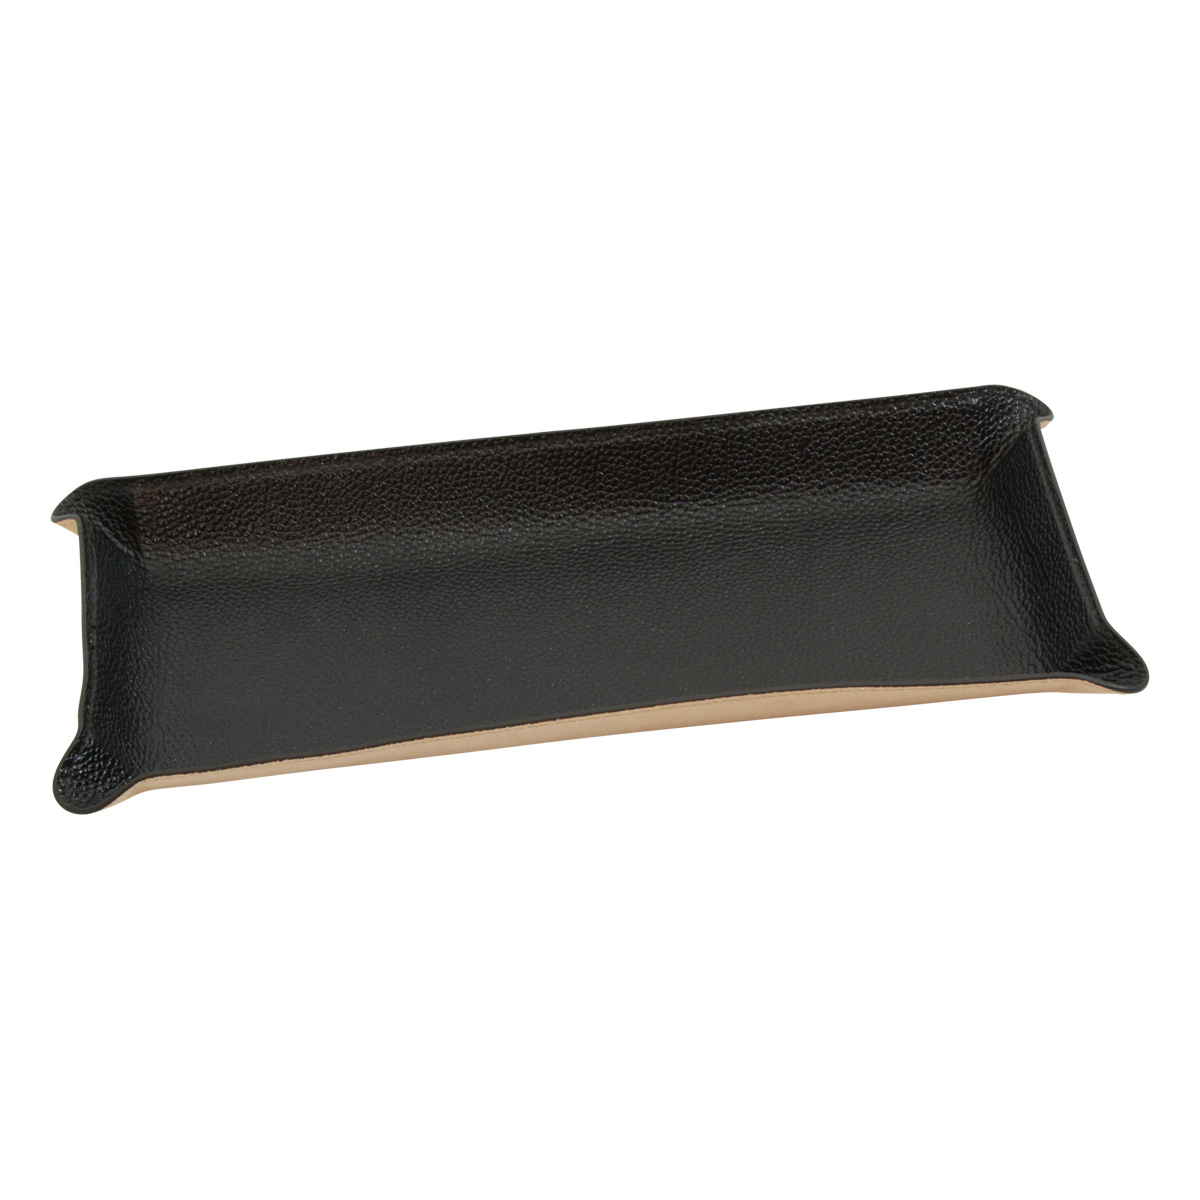 Leather desk tray - black|762051NE|Old Angler Firenze